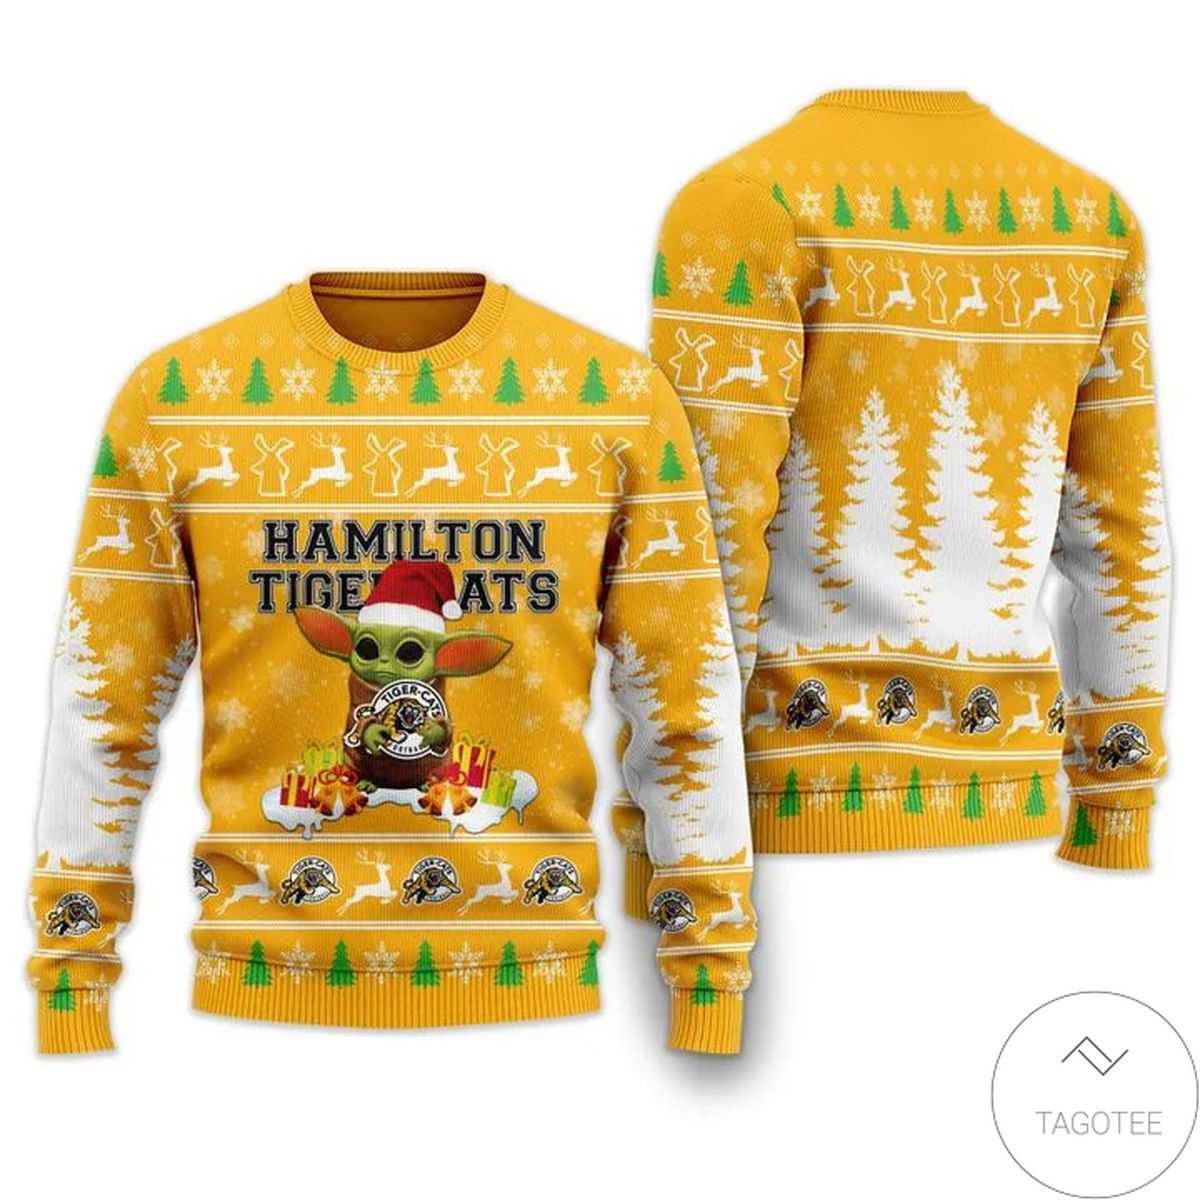 Hamilton Tiger-cats Baby Yoda Ugly Christmas Sweater